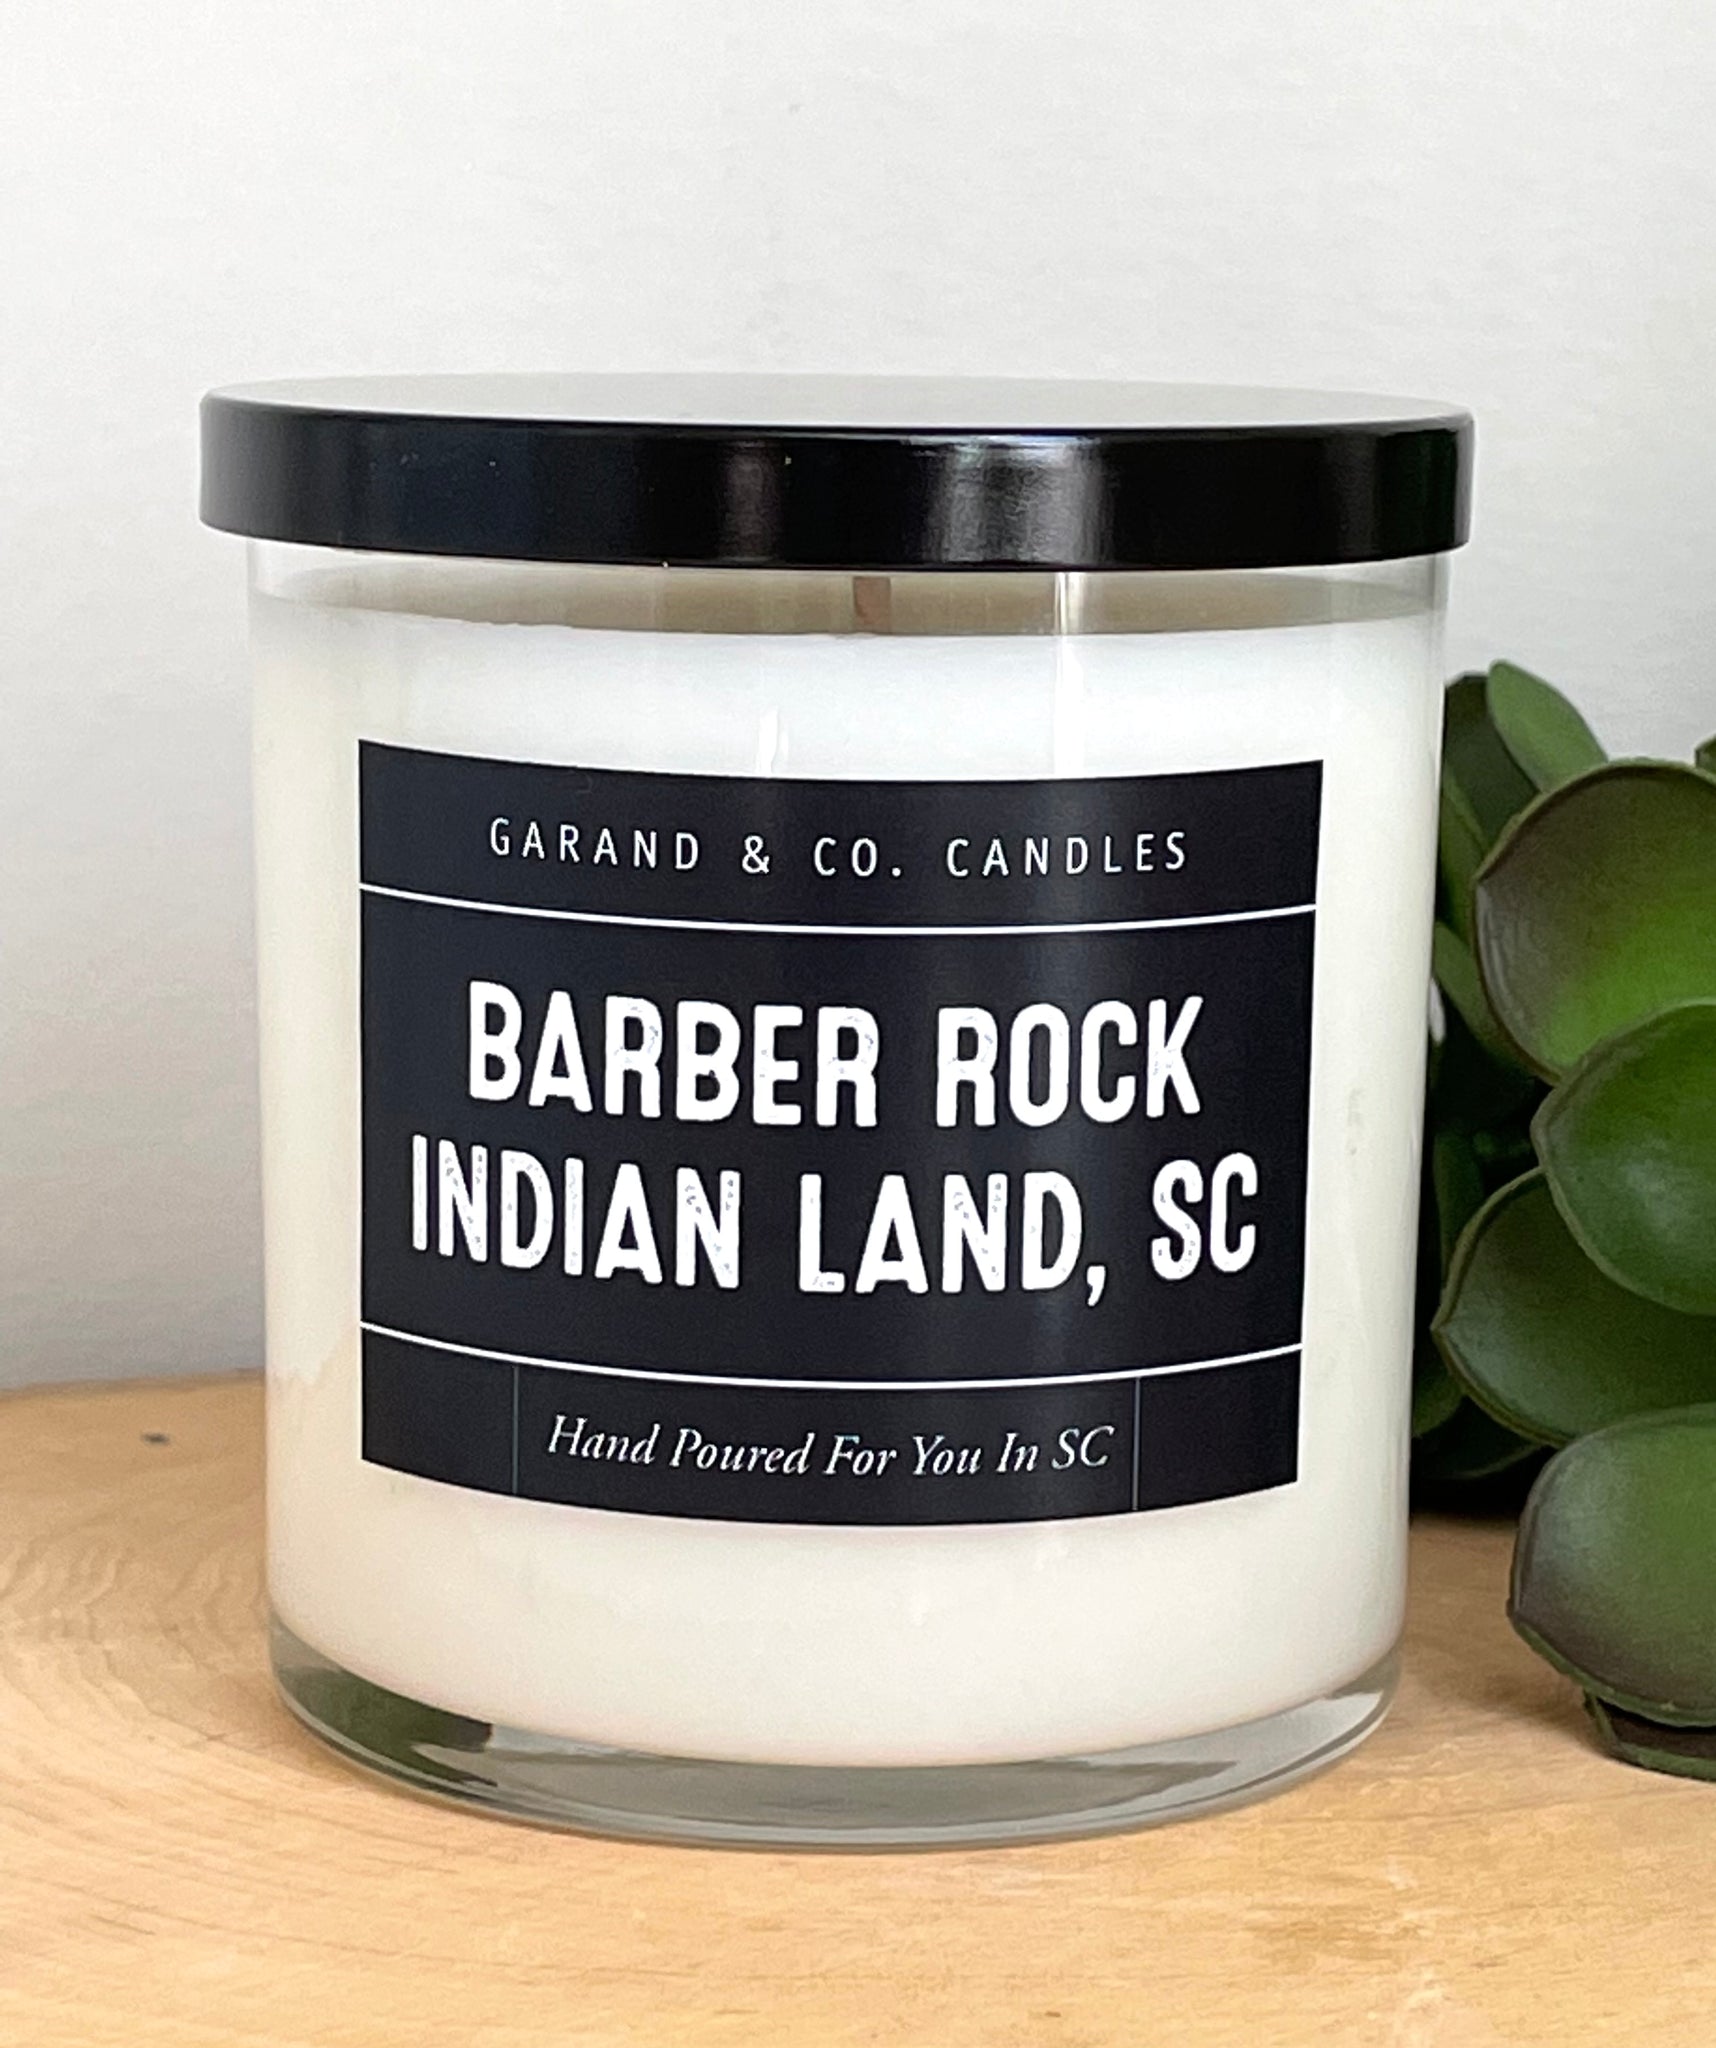 12 oz Clear Glass Jar Candle - Barber Rock Indian Land, SC